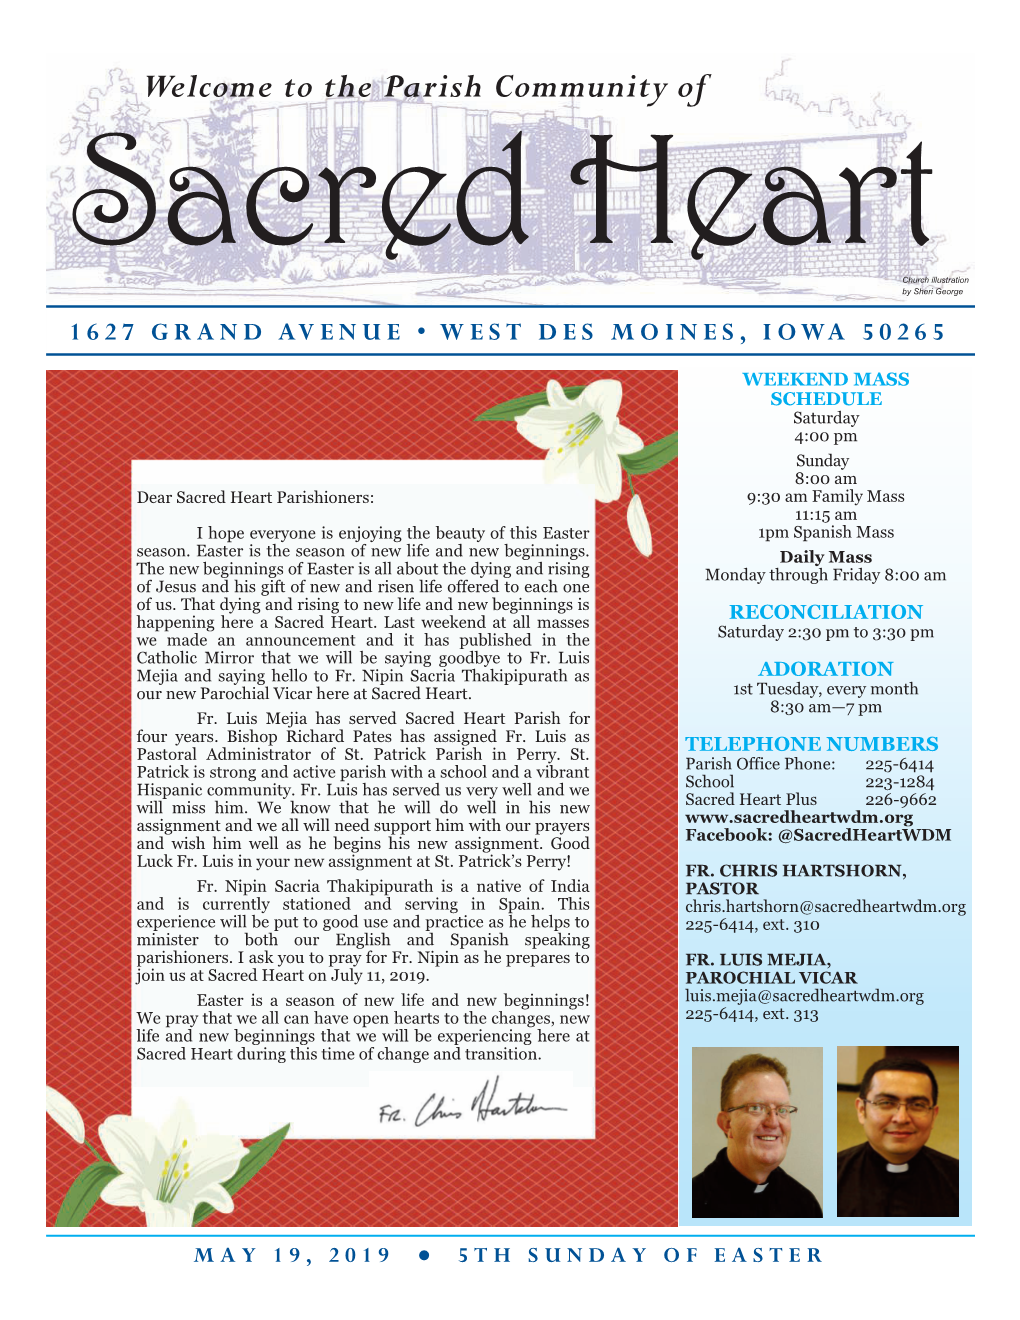 The Parish Community of Sacred Heart